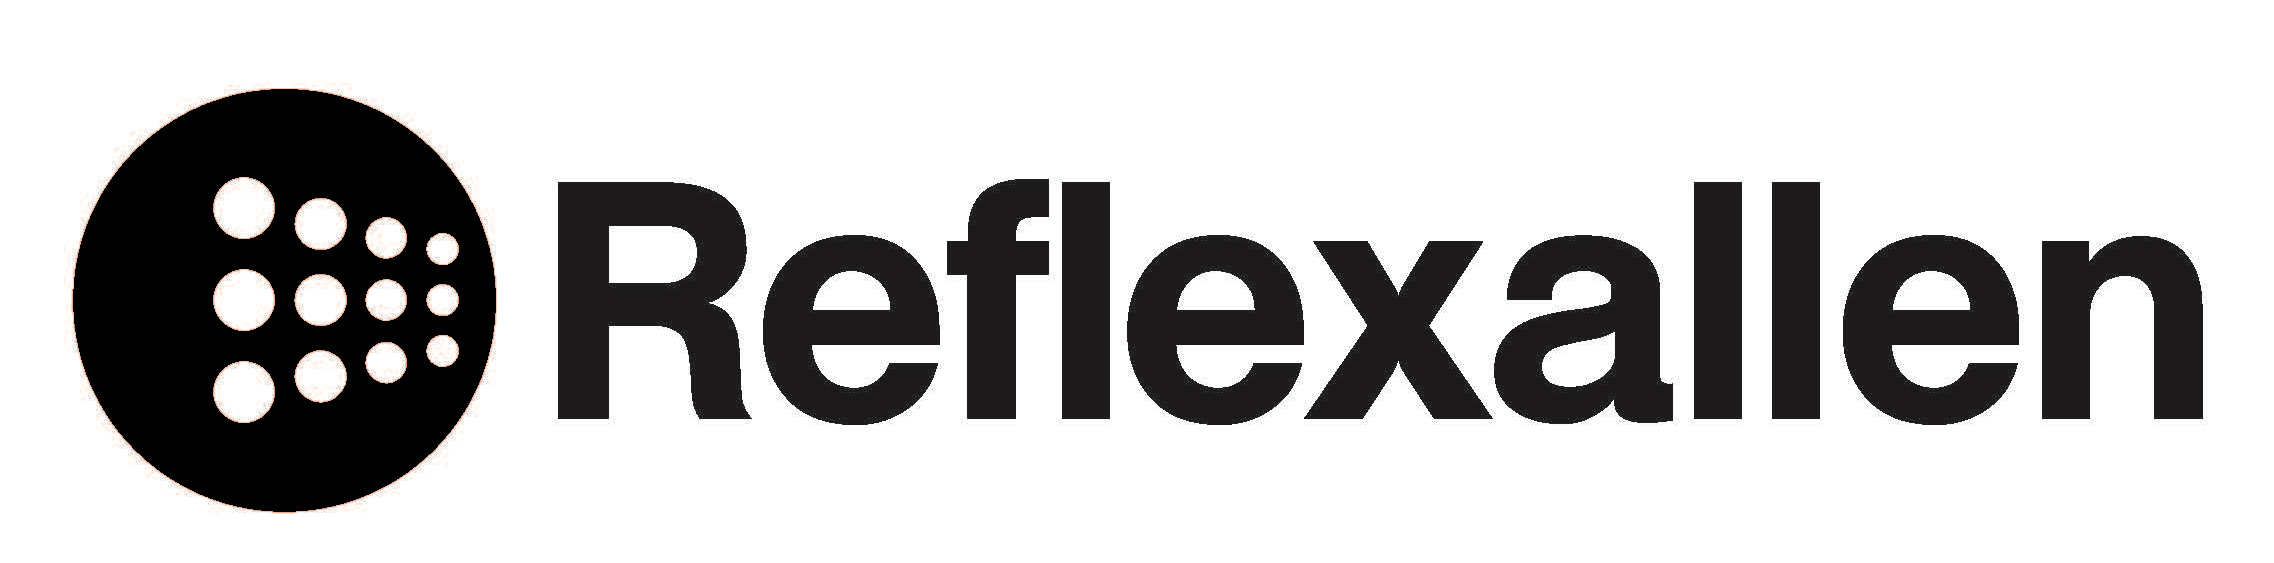 Reflexallen logo